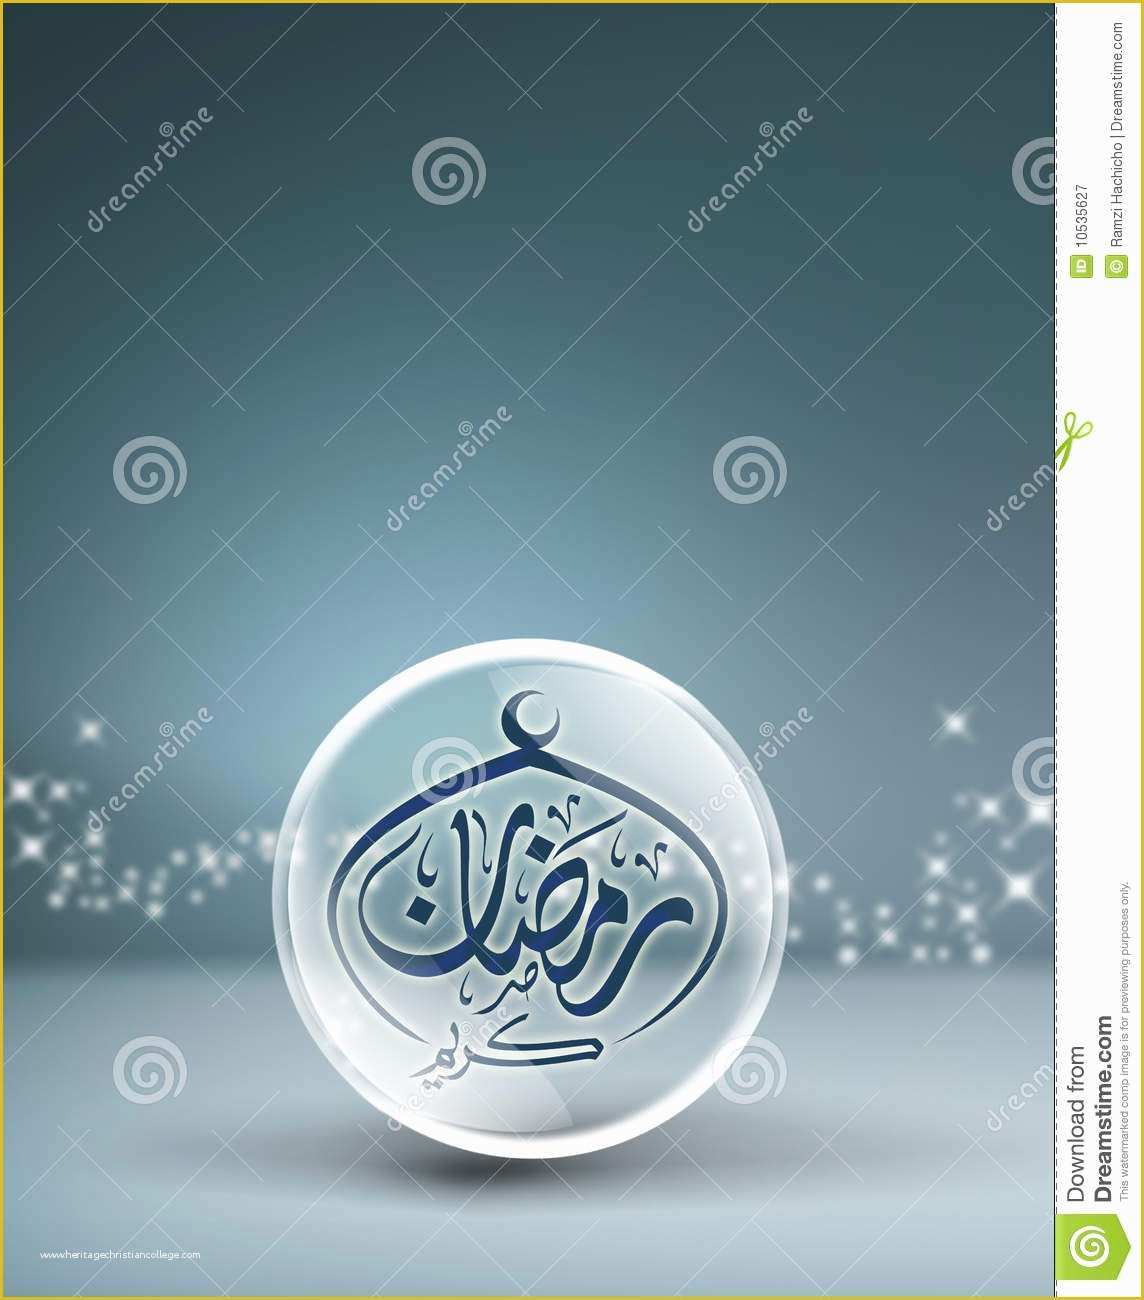 Islamic Website Templates Free Download Of islamic Ramadan Template Ramadan Greeting Royalty Free